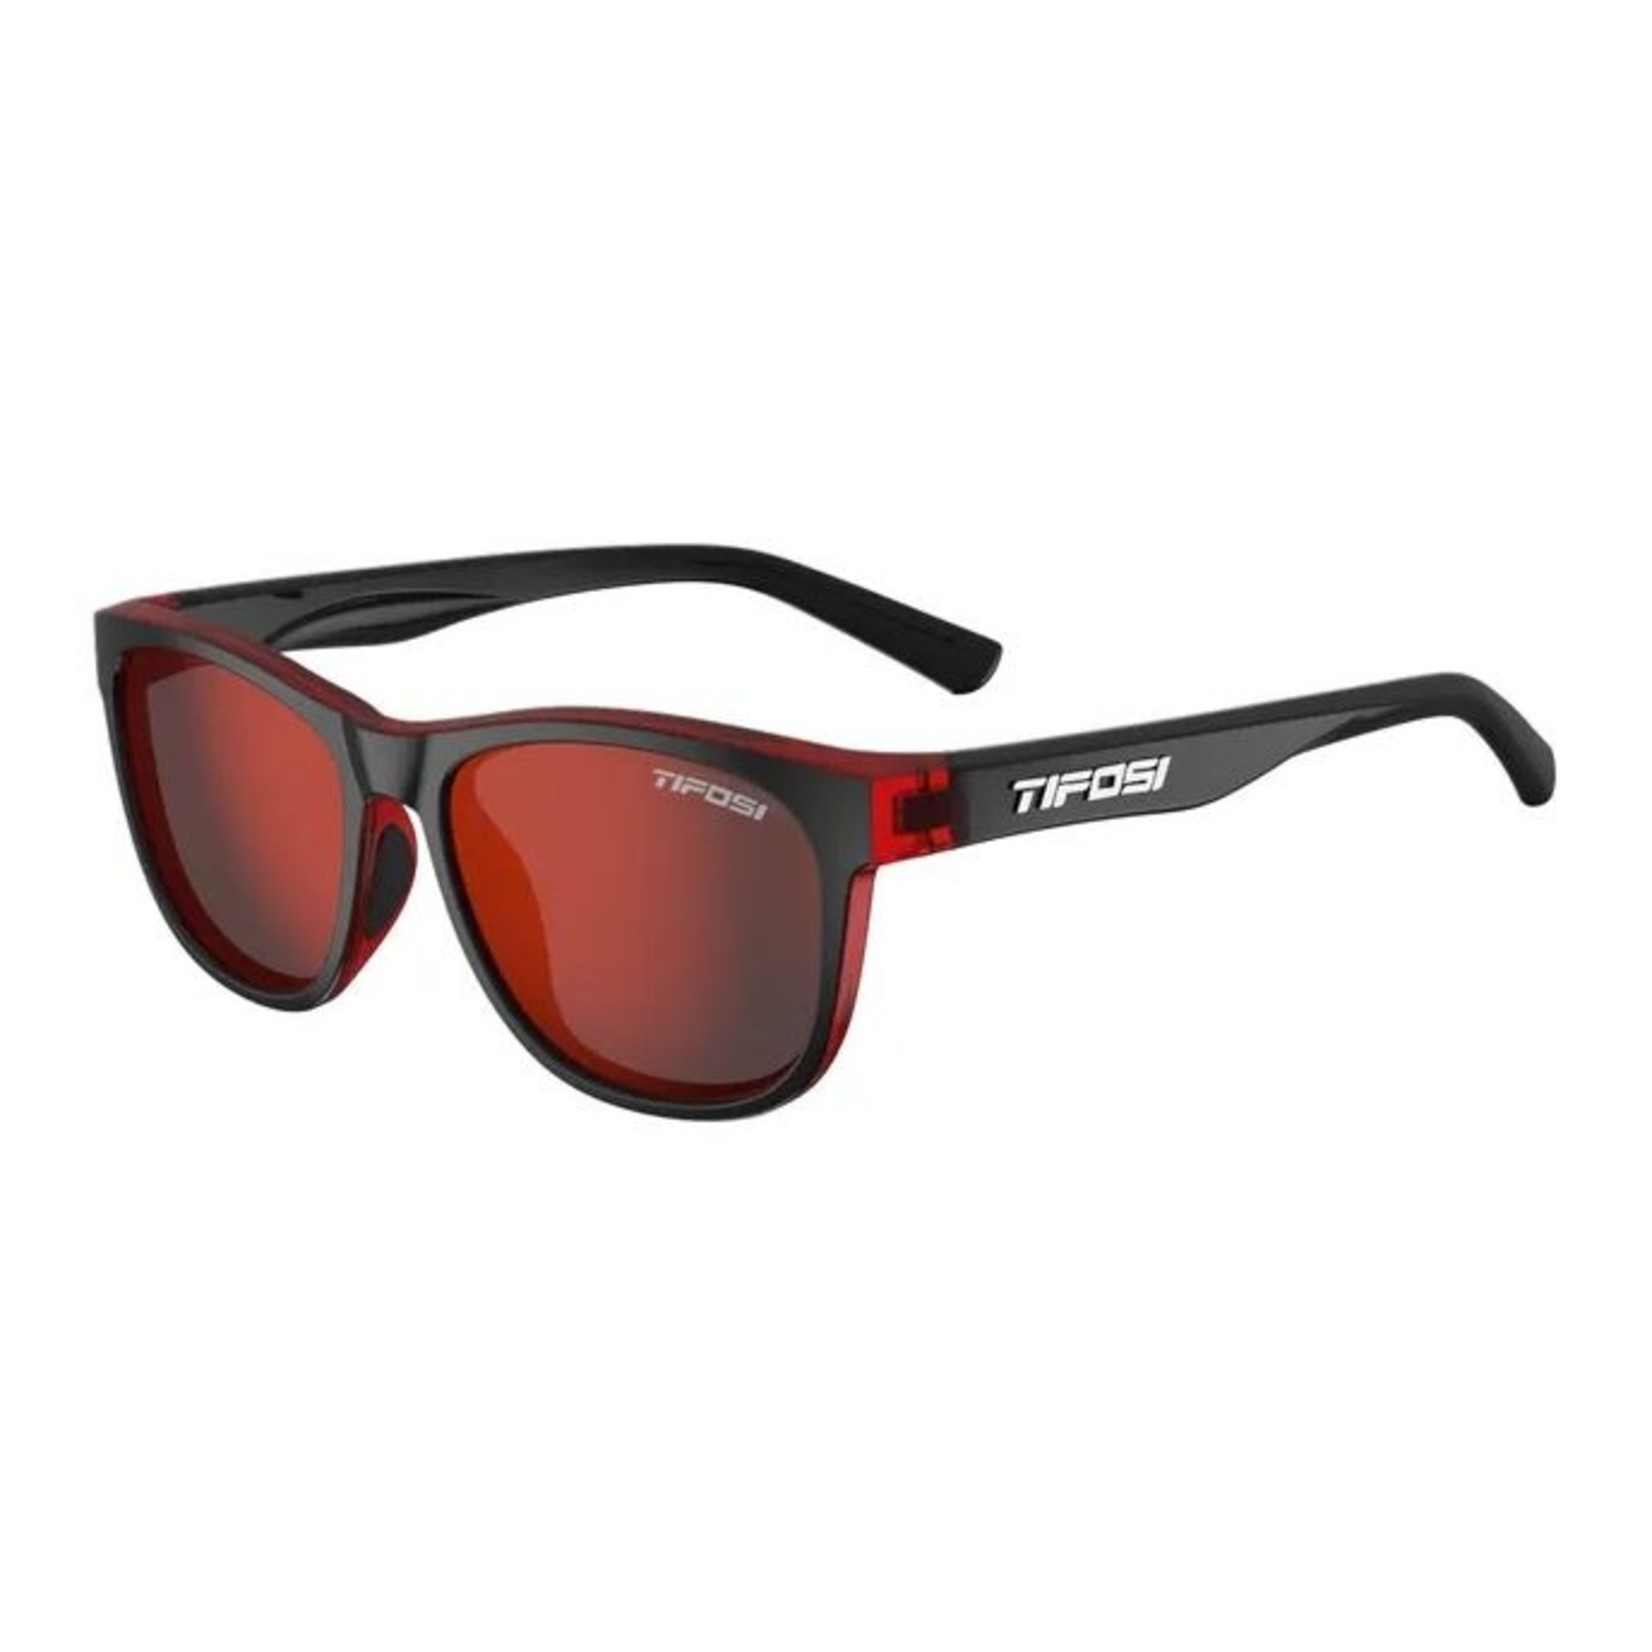 Tifosi Tifosi Cycling Sunglasses - Swank Crimson/Onyx Shatterproof Polycarbonate